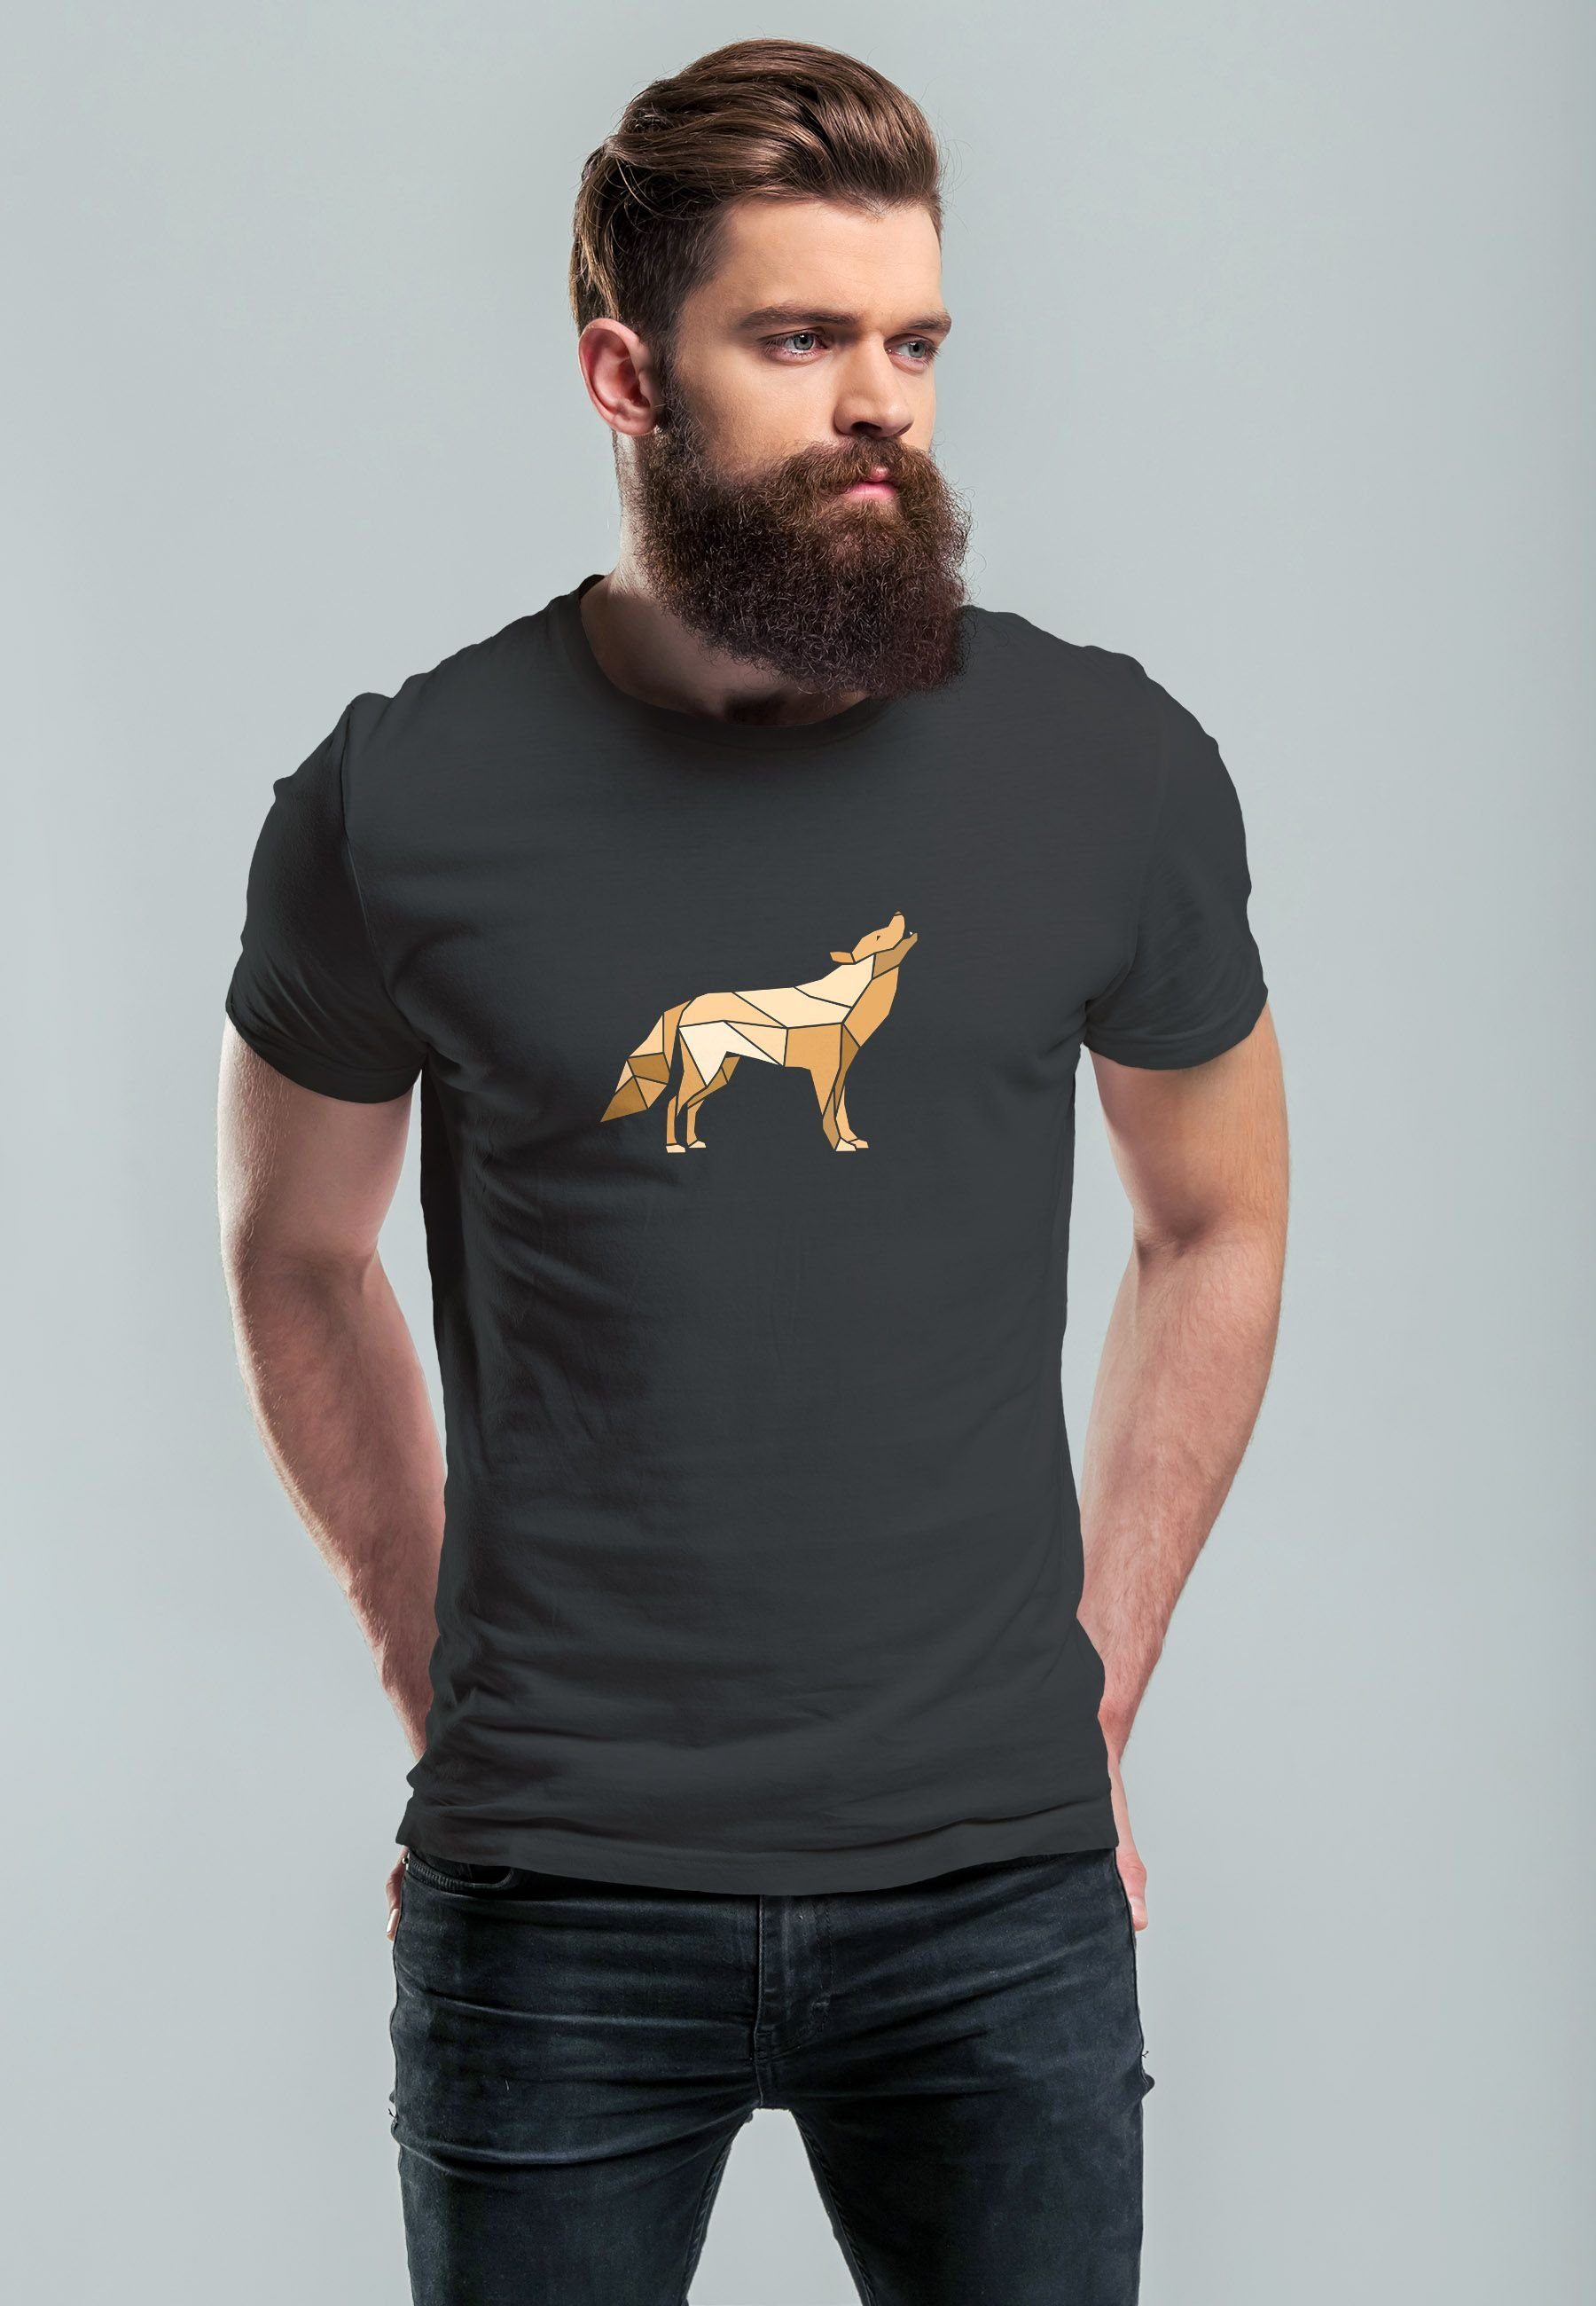 Neverless Print-Shirt Grafik T-Shirt Tiermotiv Wolf Print Herren anthrazit Polygon mit Bedruckt Fashion Outdoor